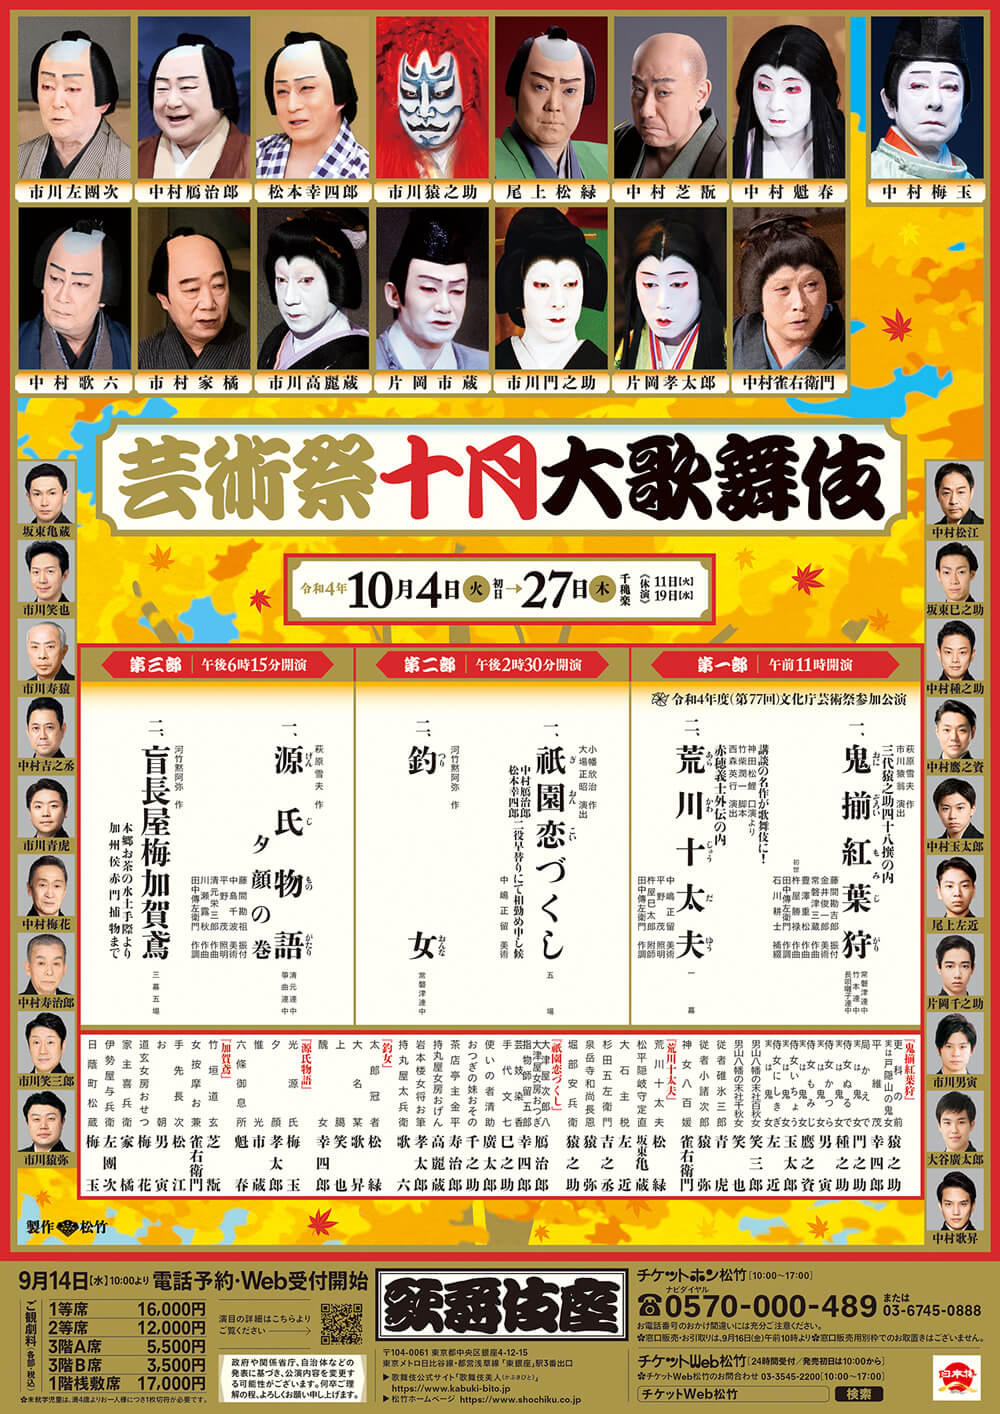 October Program at the Kabukiza Theatre